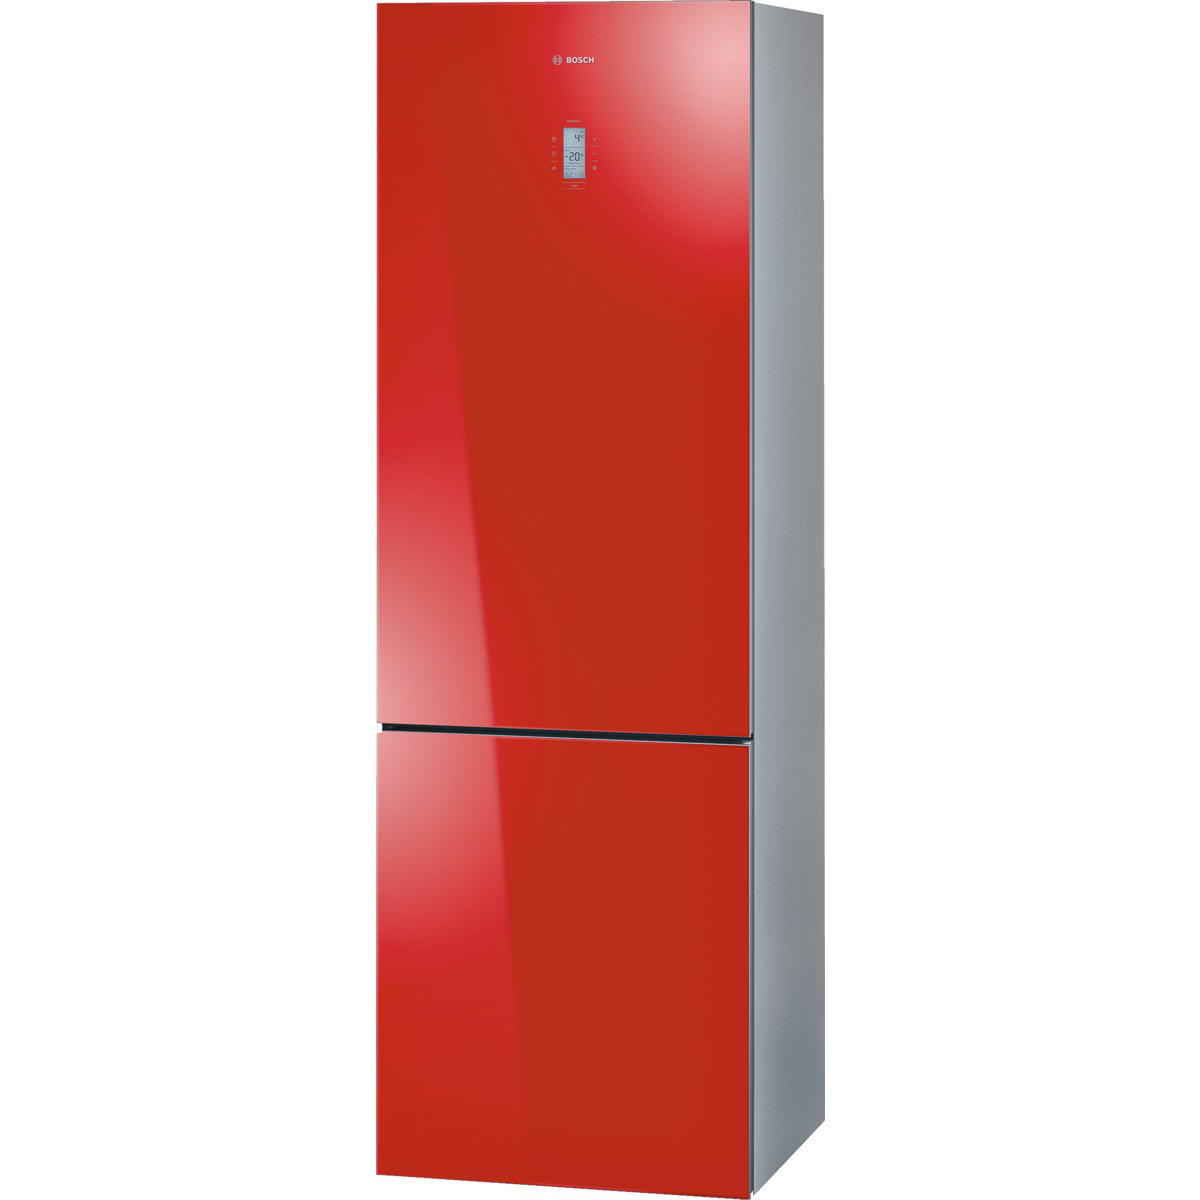  Combina frigorifica Bosch KGN36SR31, 285 l, Clasa A++, Sticla rosie 